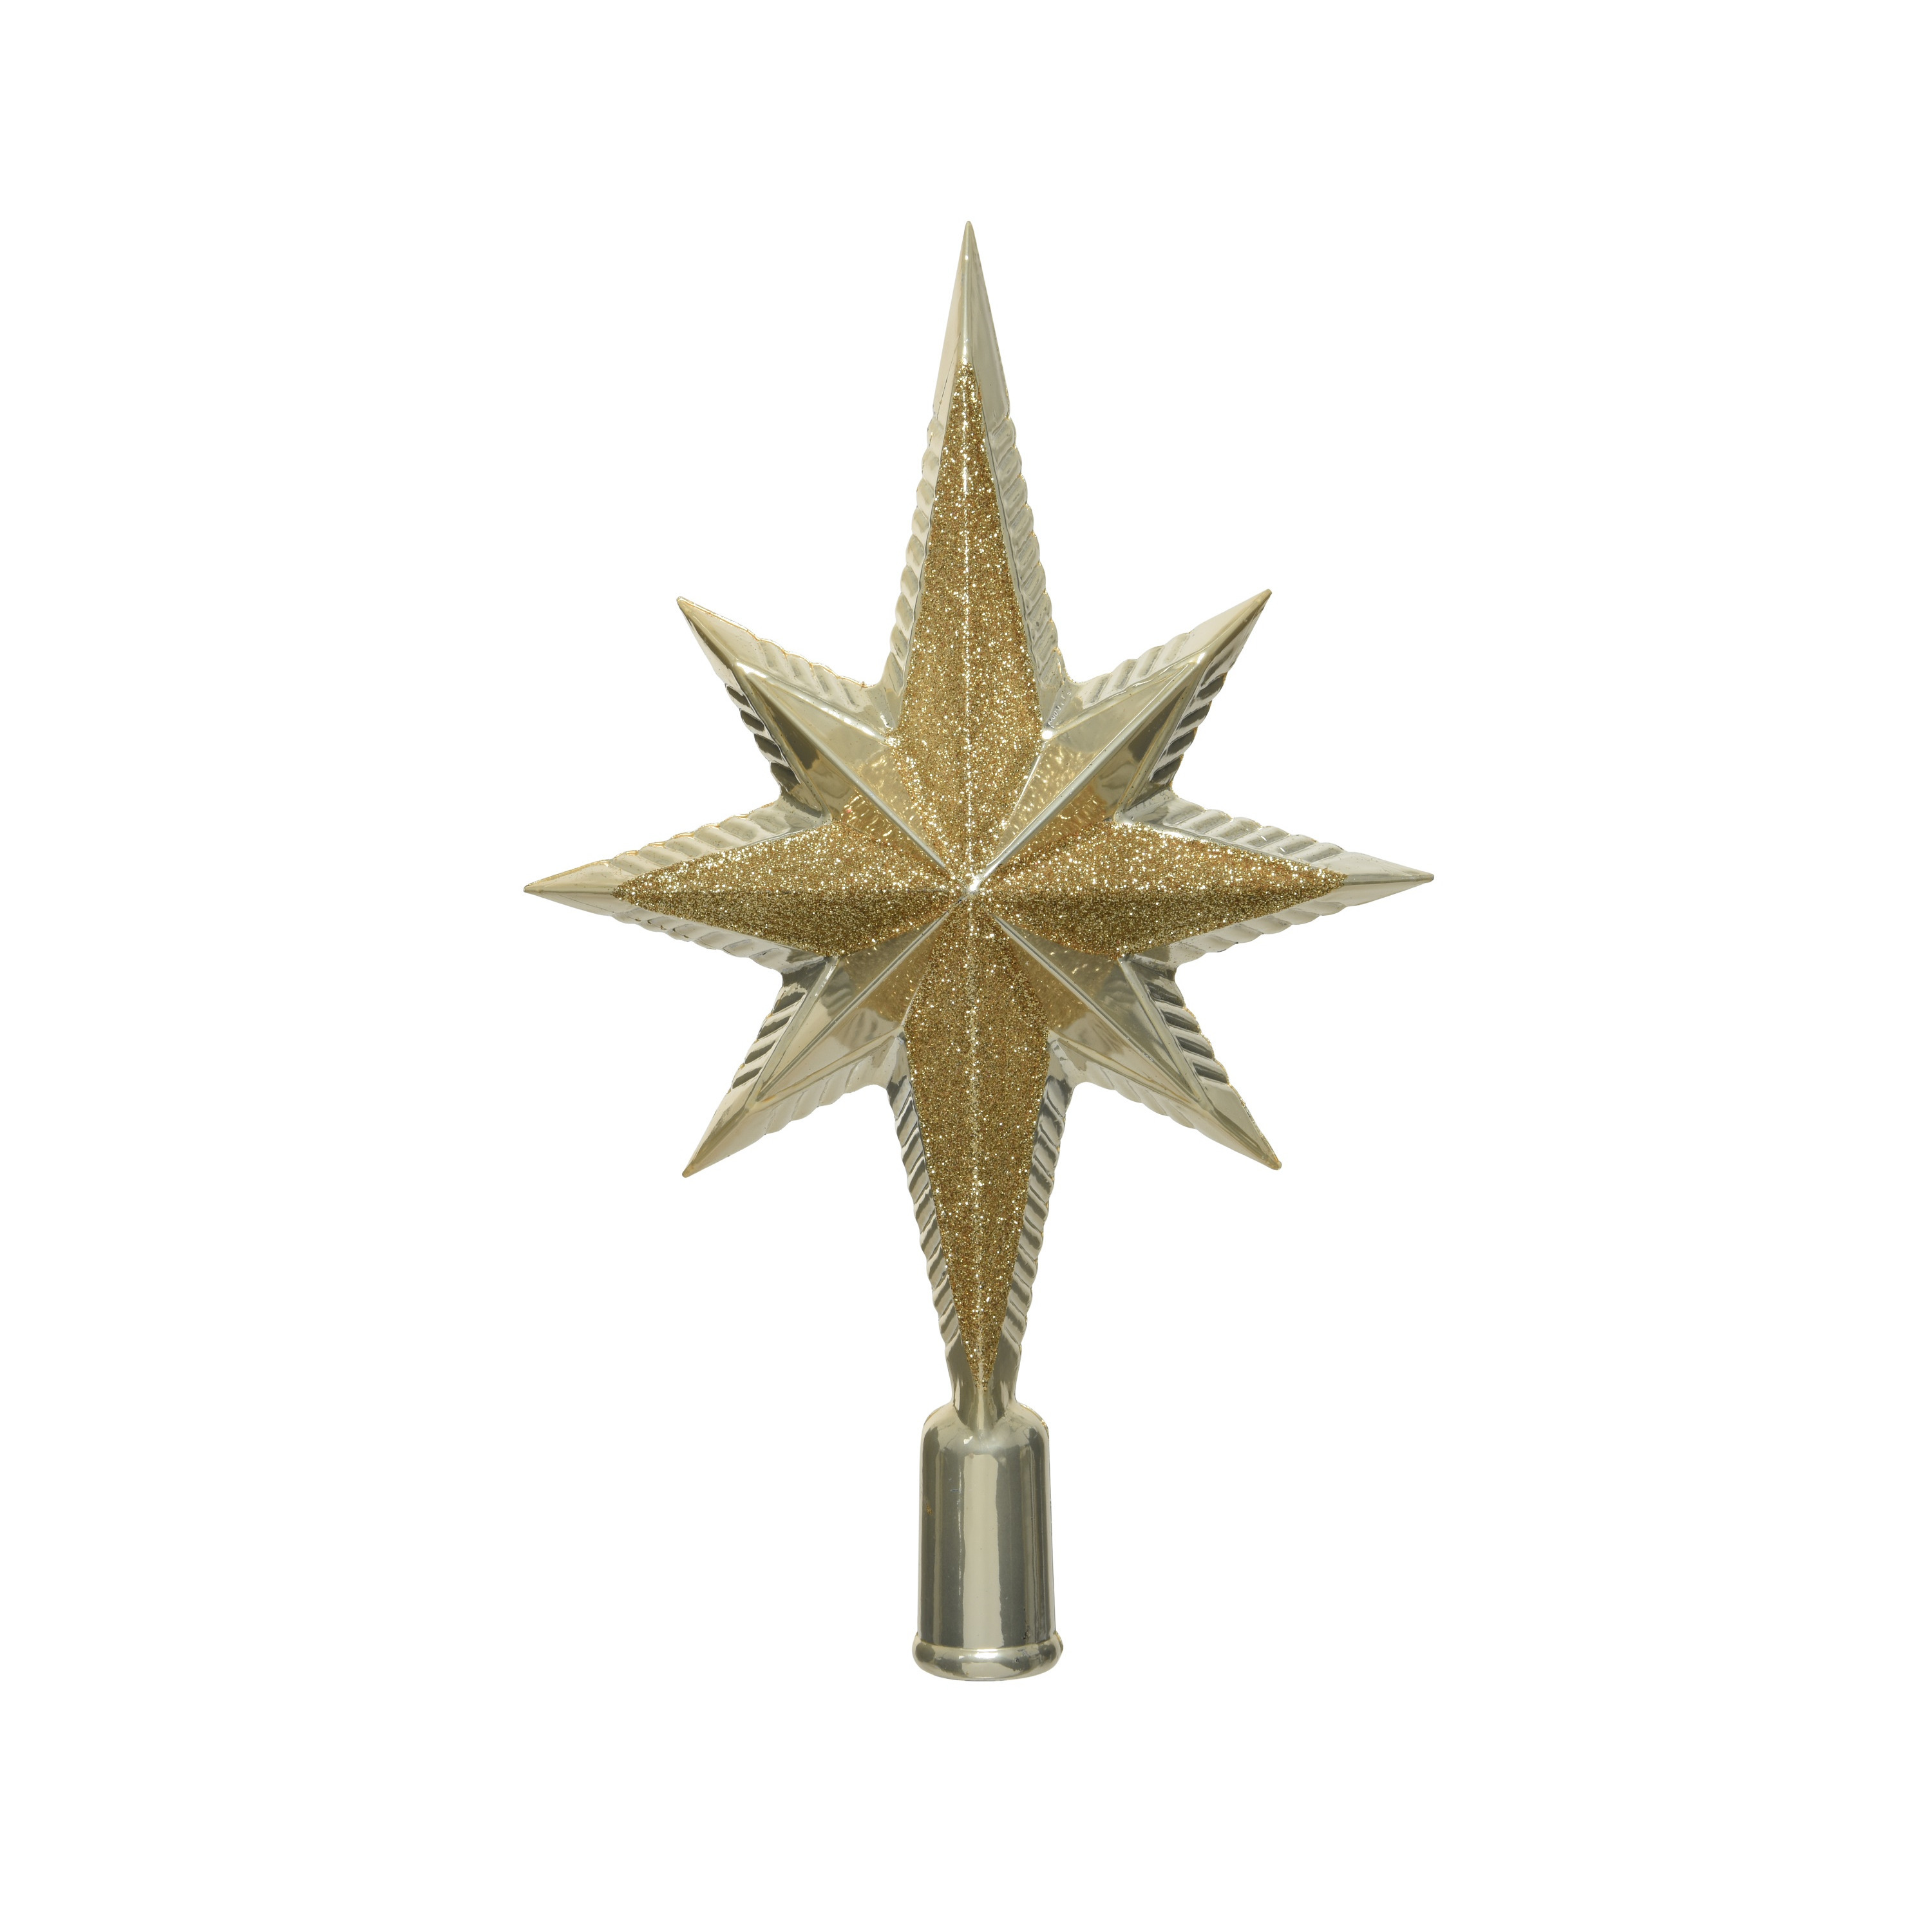 Kunststof glitter ster piek-kerstboom topper parel-champagne 25,5 cm